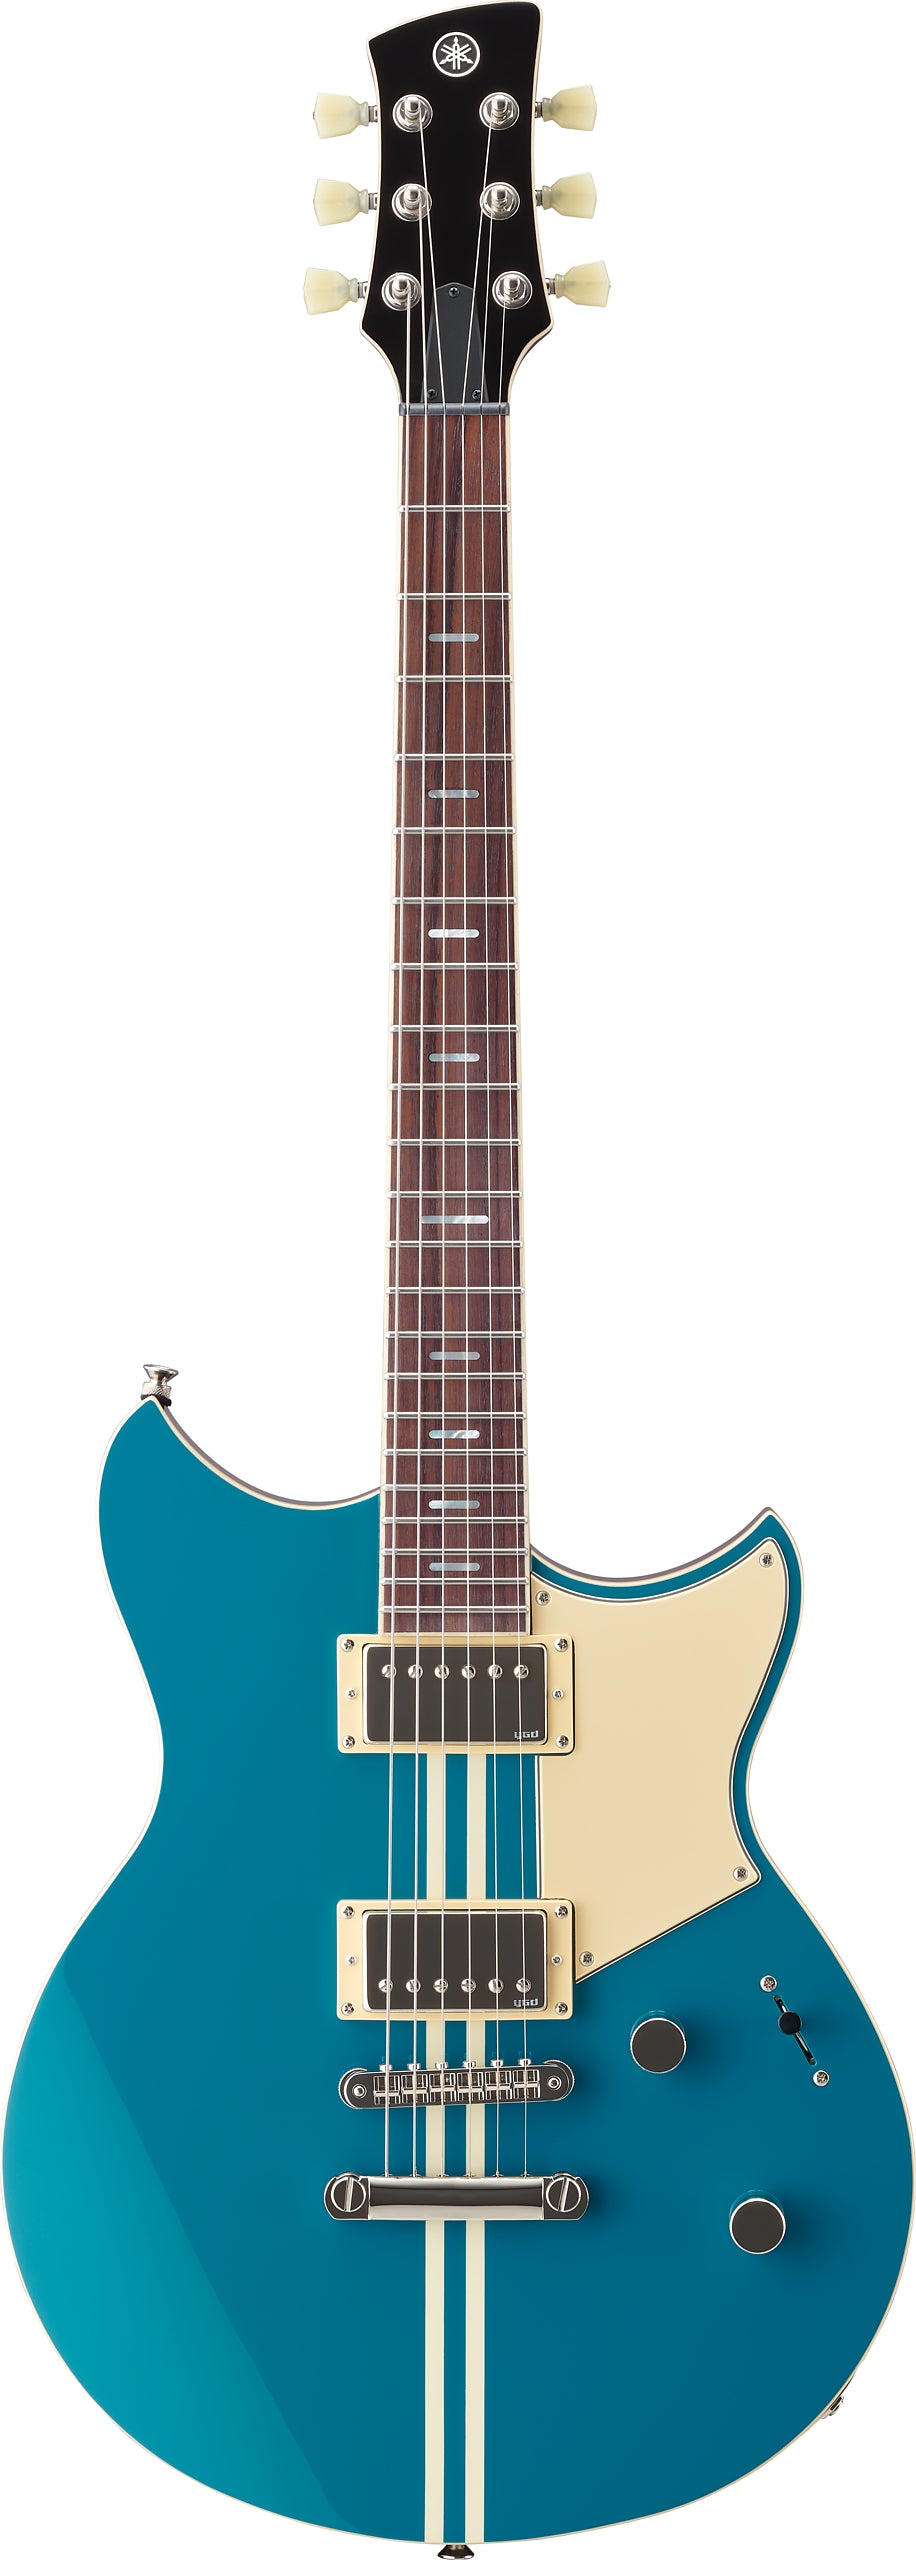 Yamaha Revstar II RSS20 Standard Electric Guitar